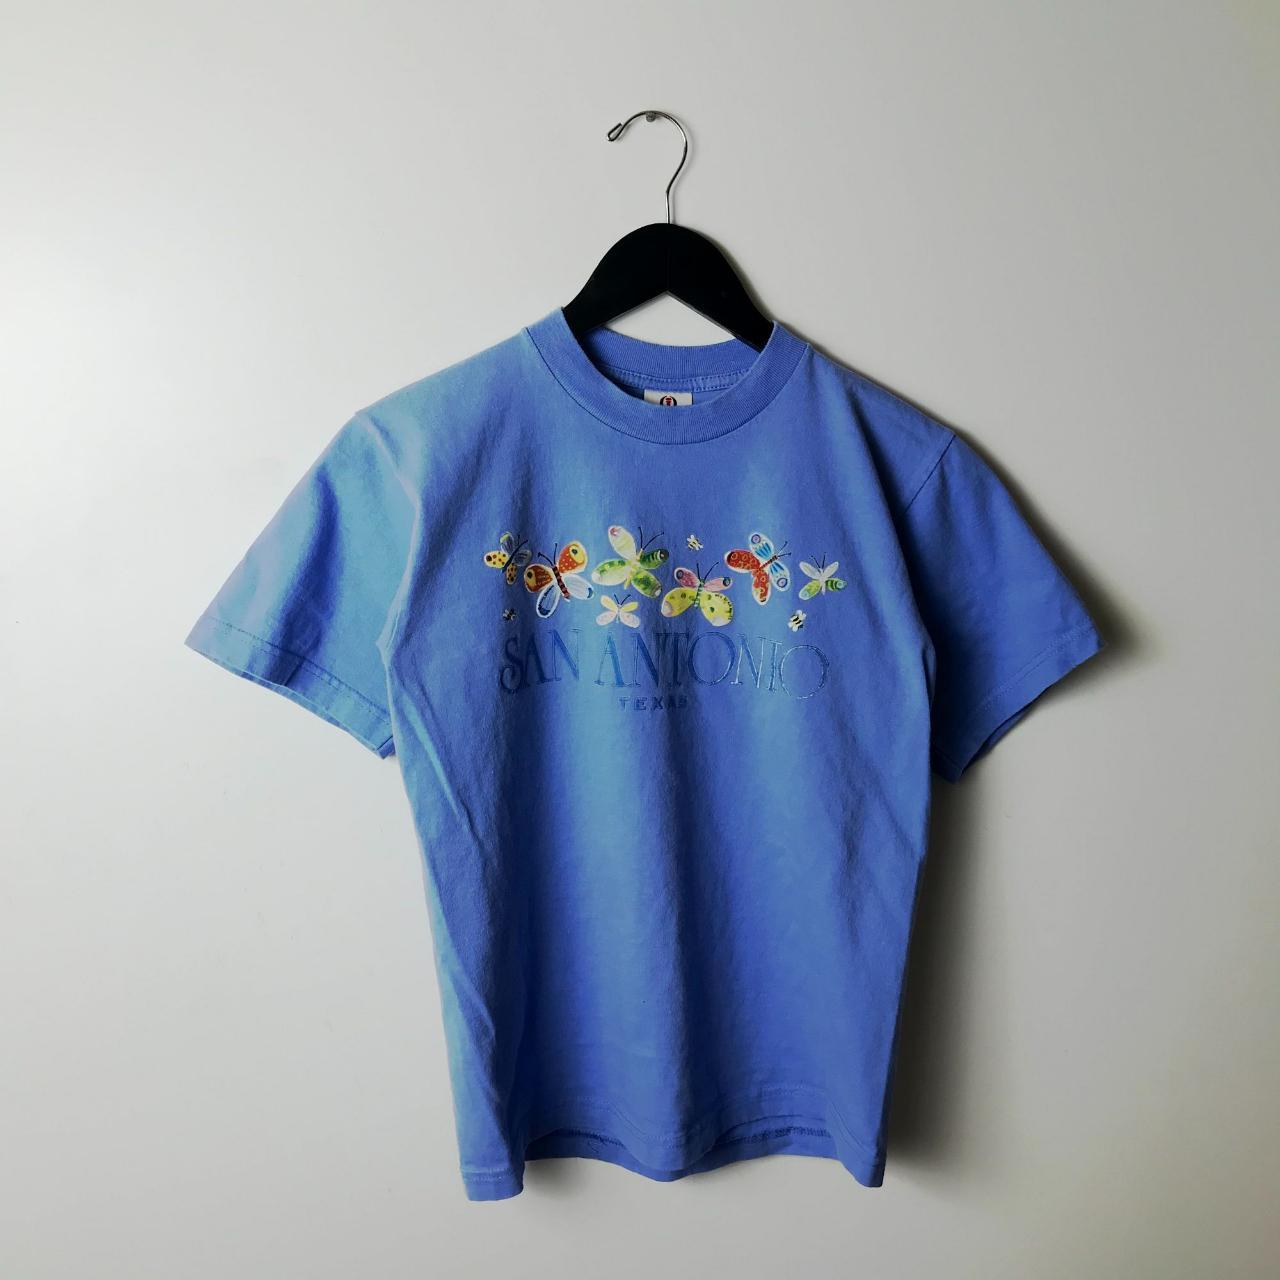 00s Vintage San Antonio Texas T Shirt Blue Extra... - Depop